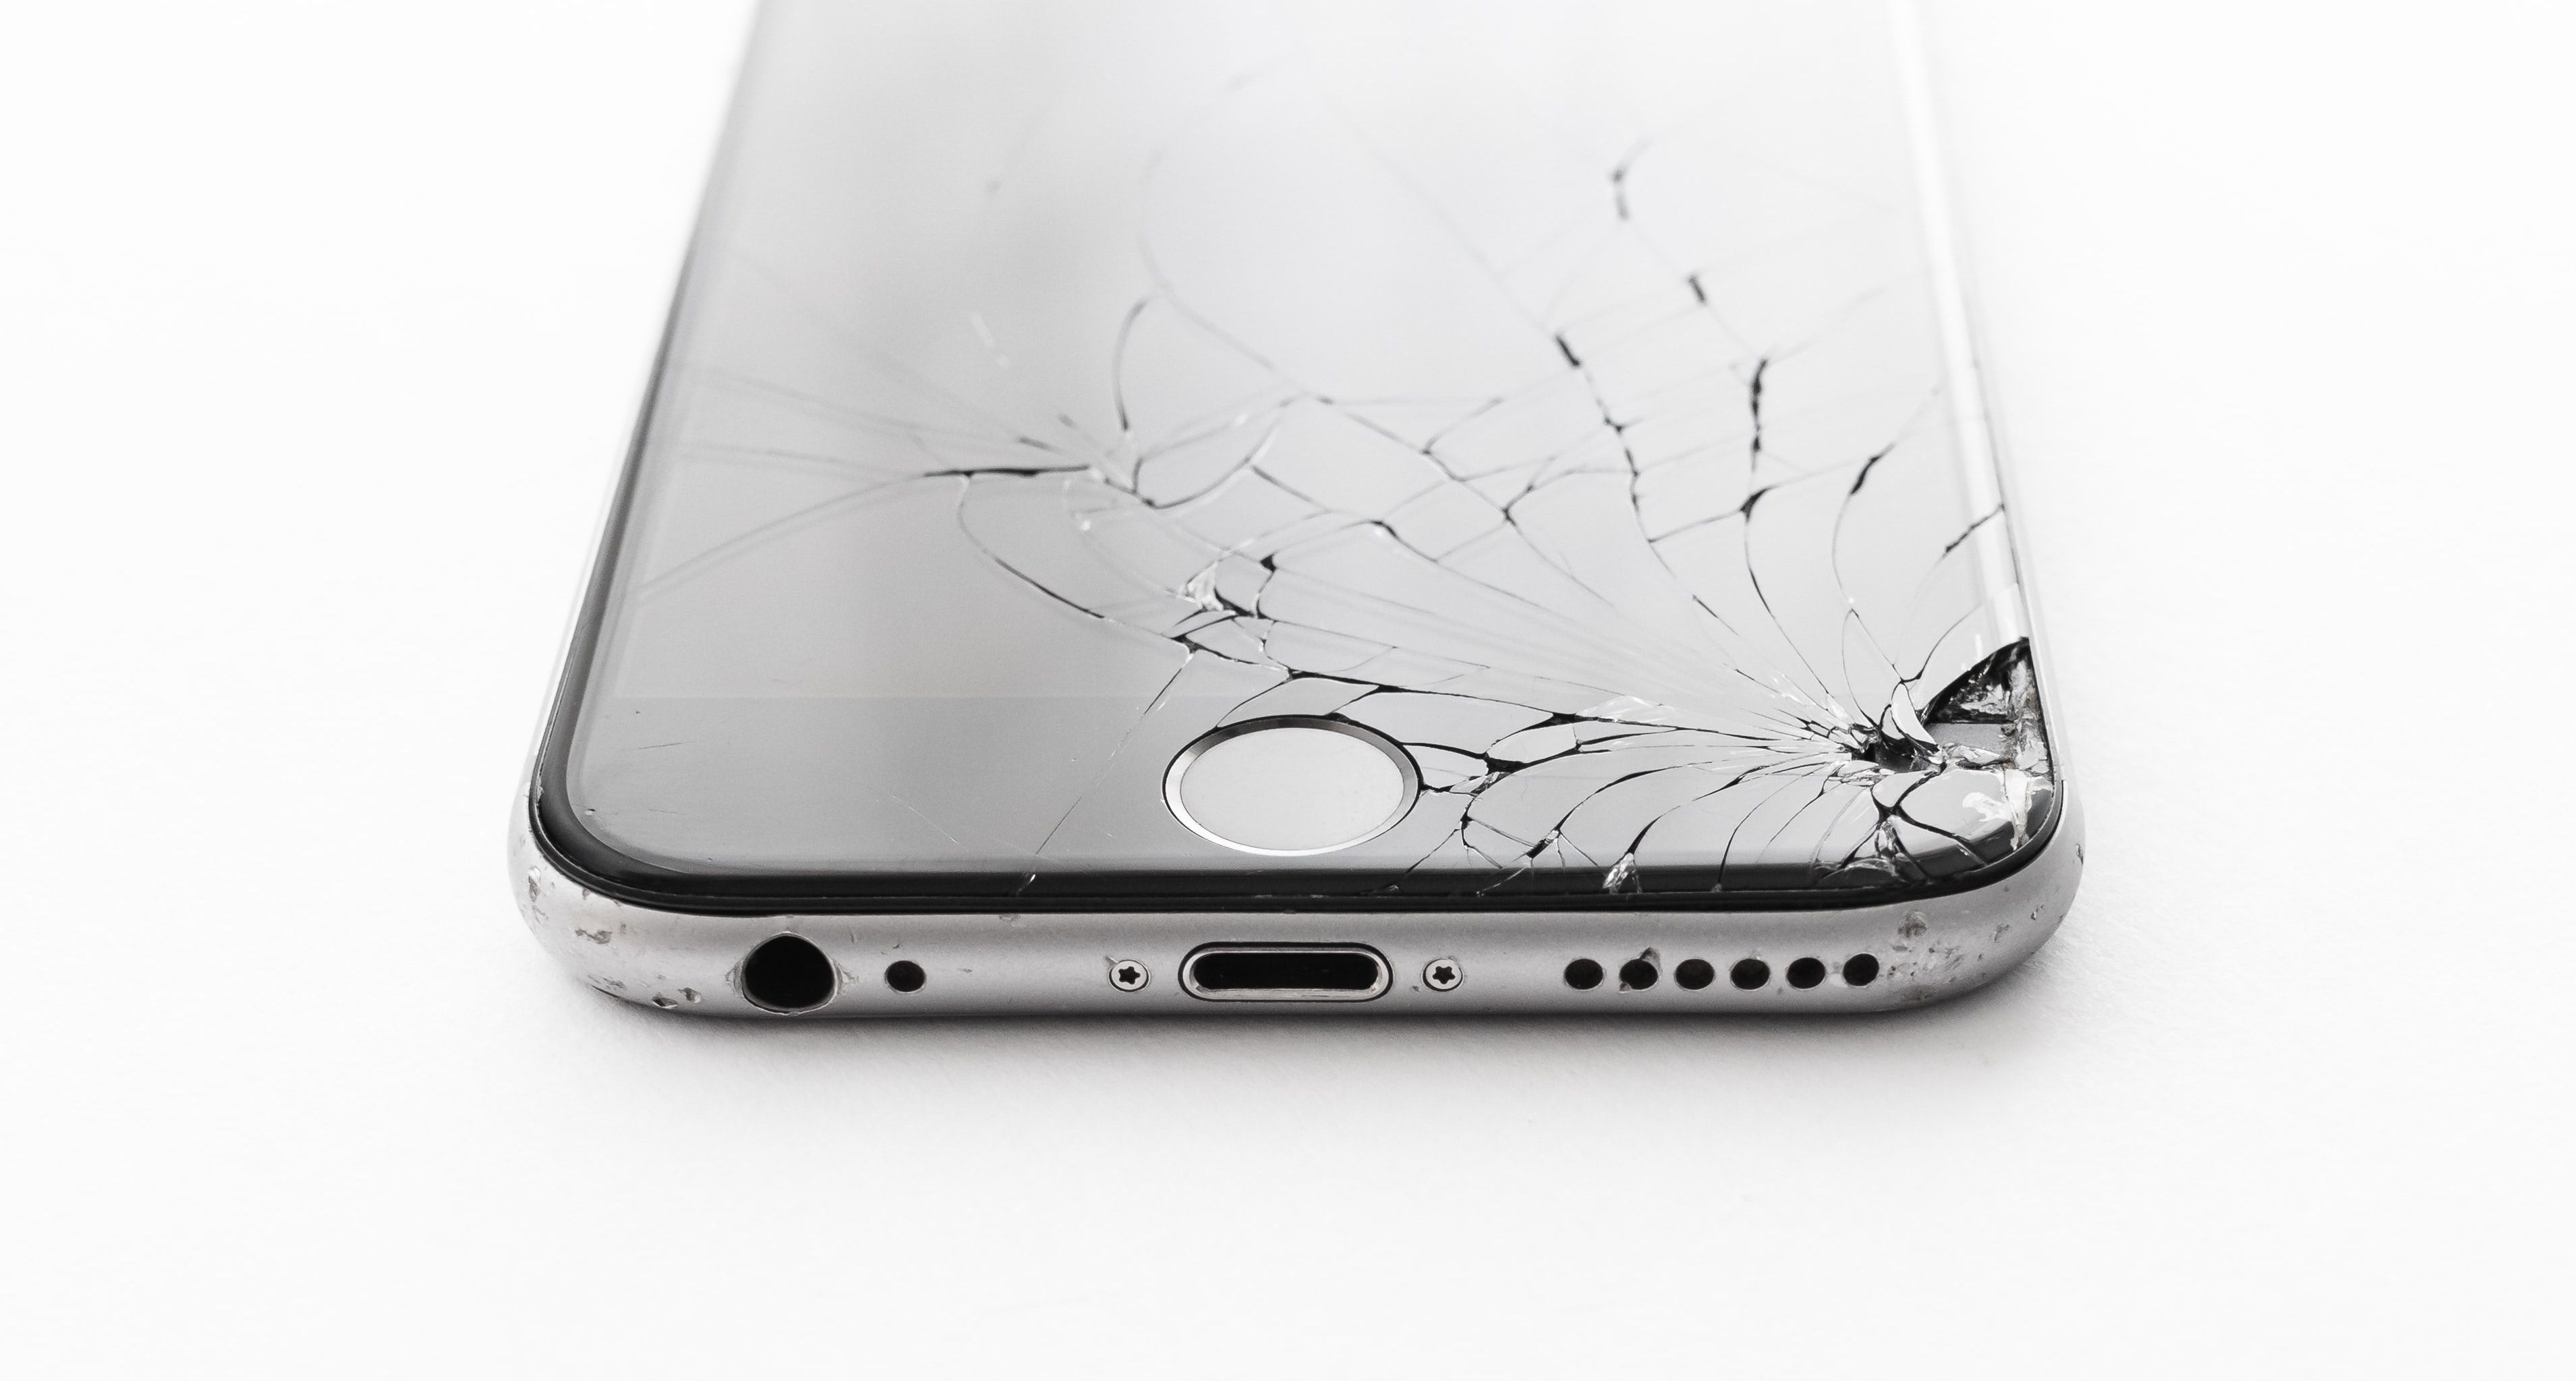 Damaged iPhone with cracks